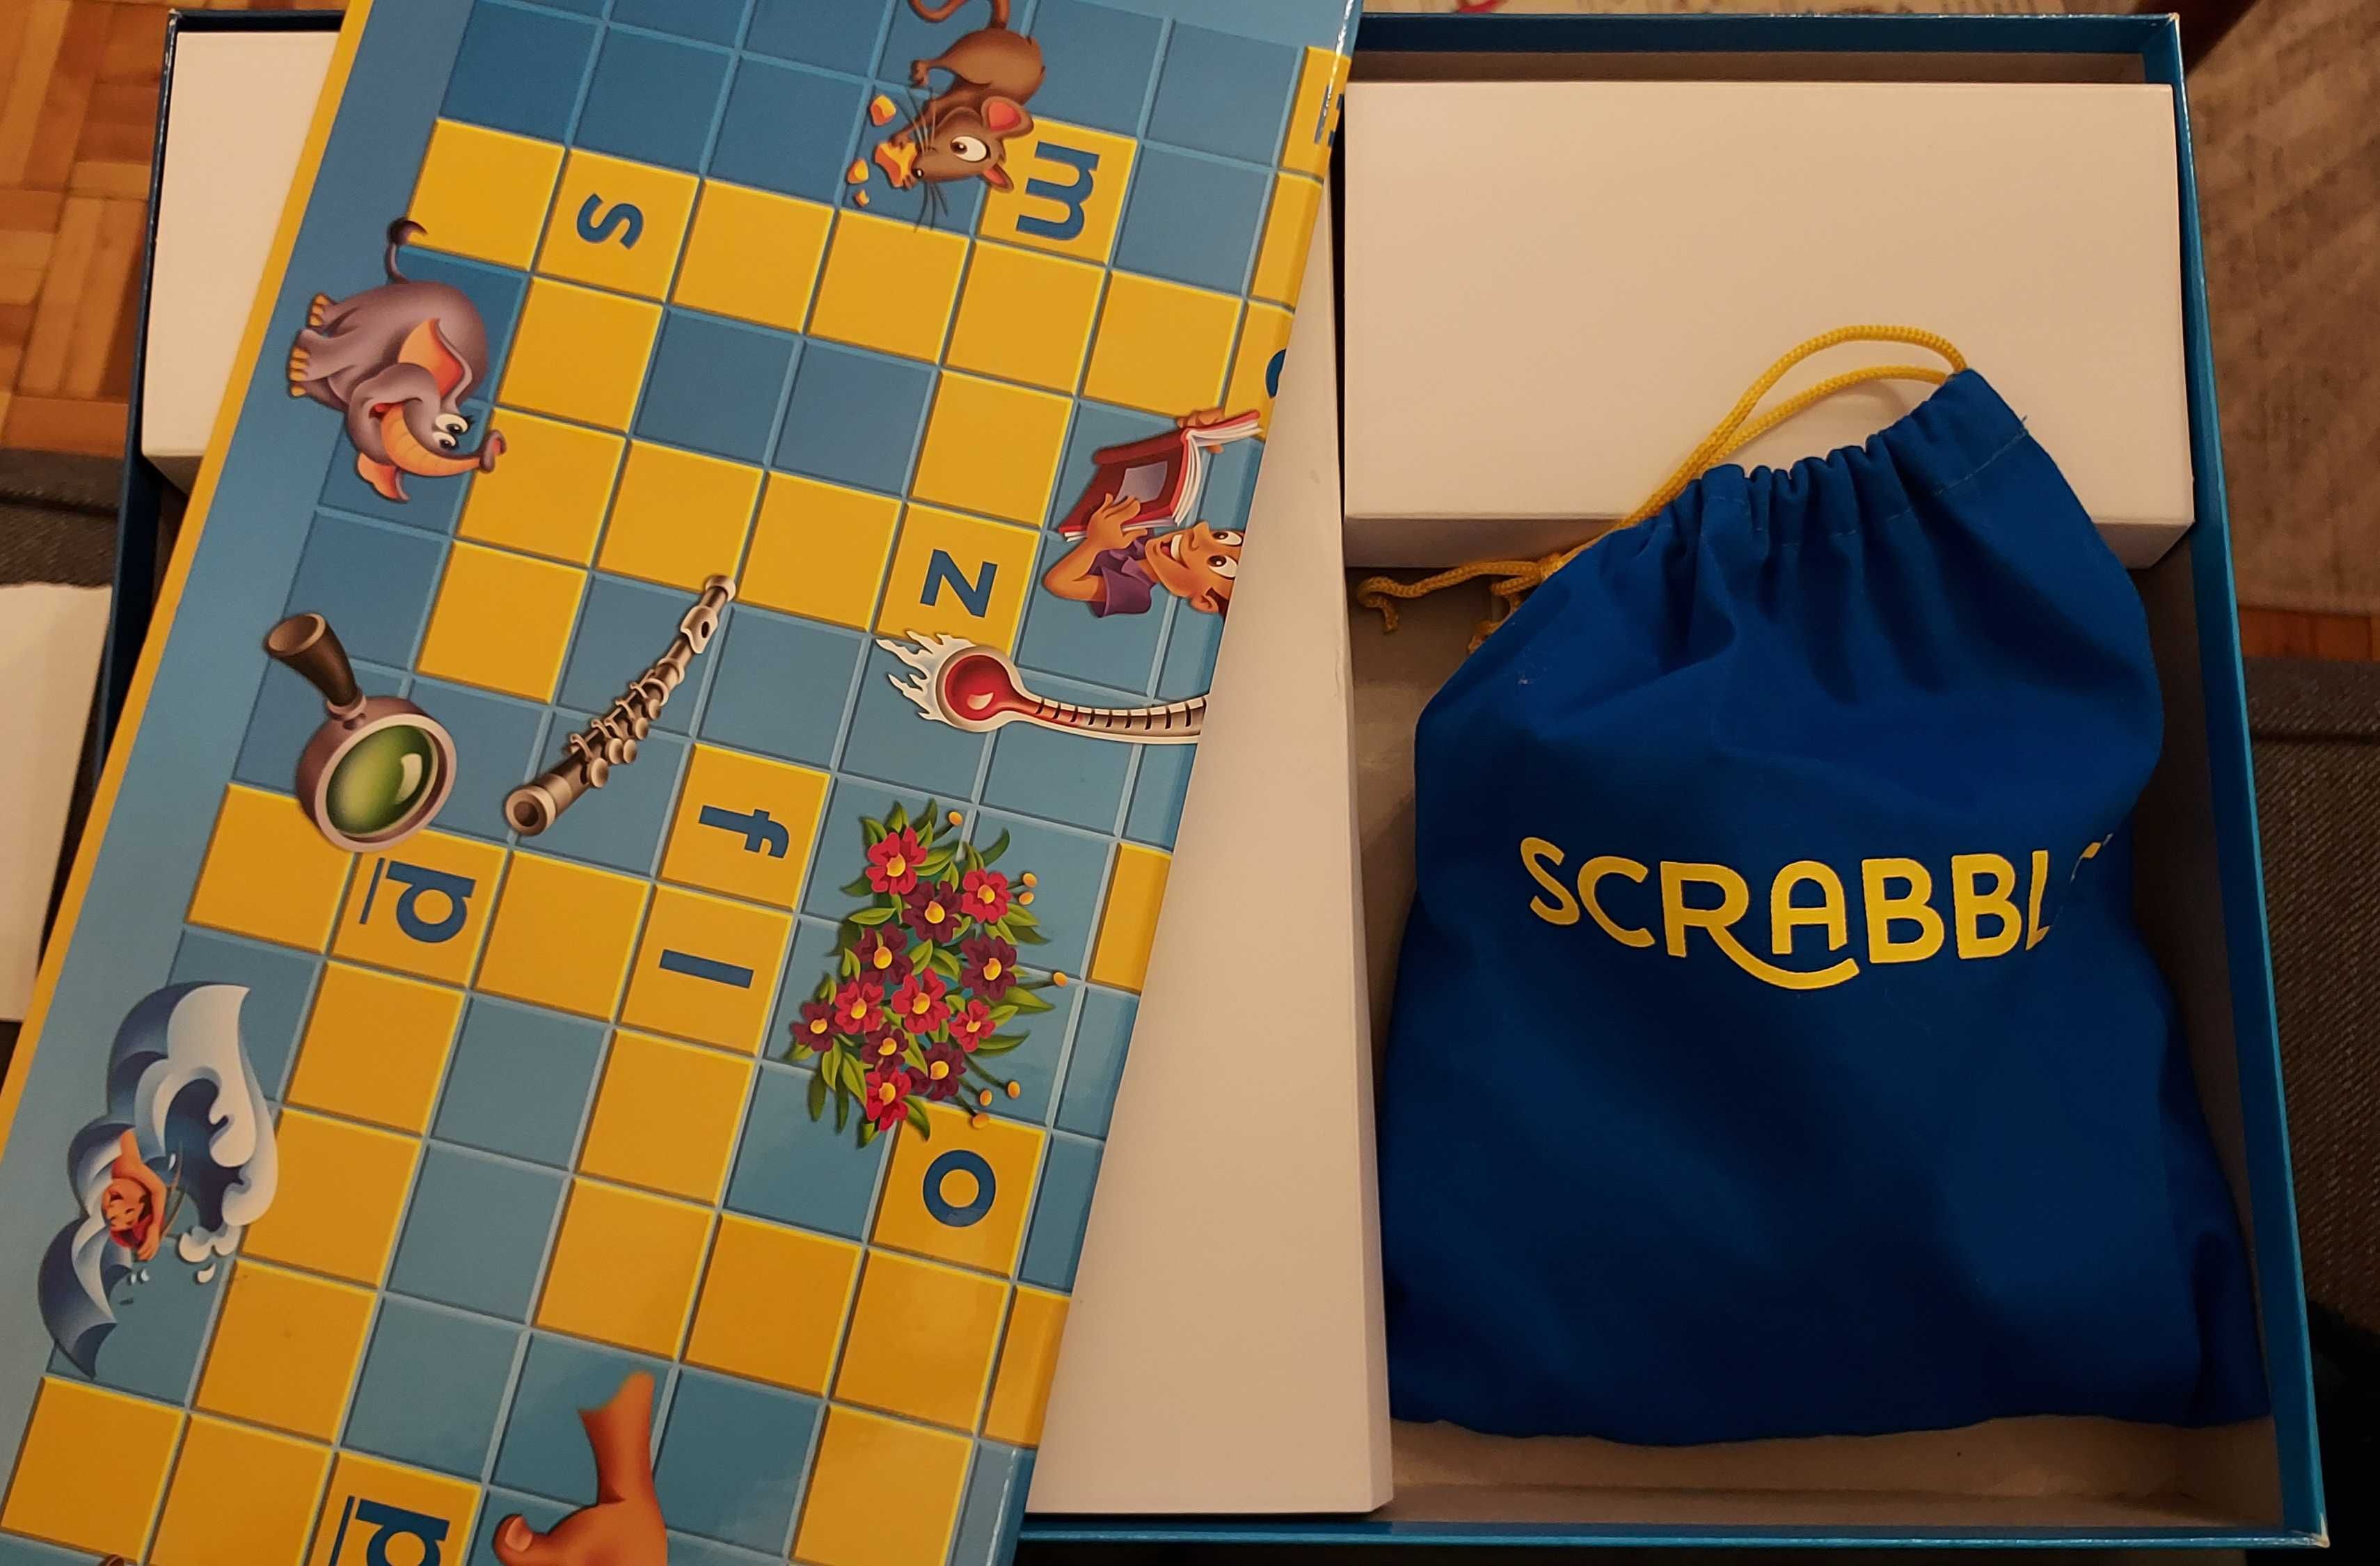 Scrabble Junior MATTEL